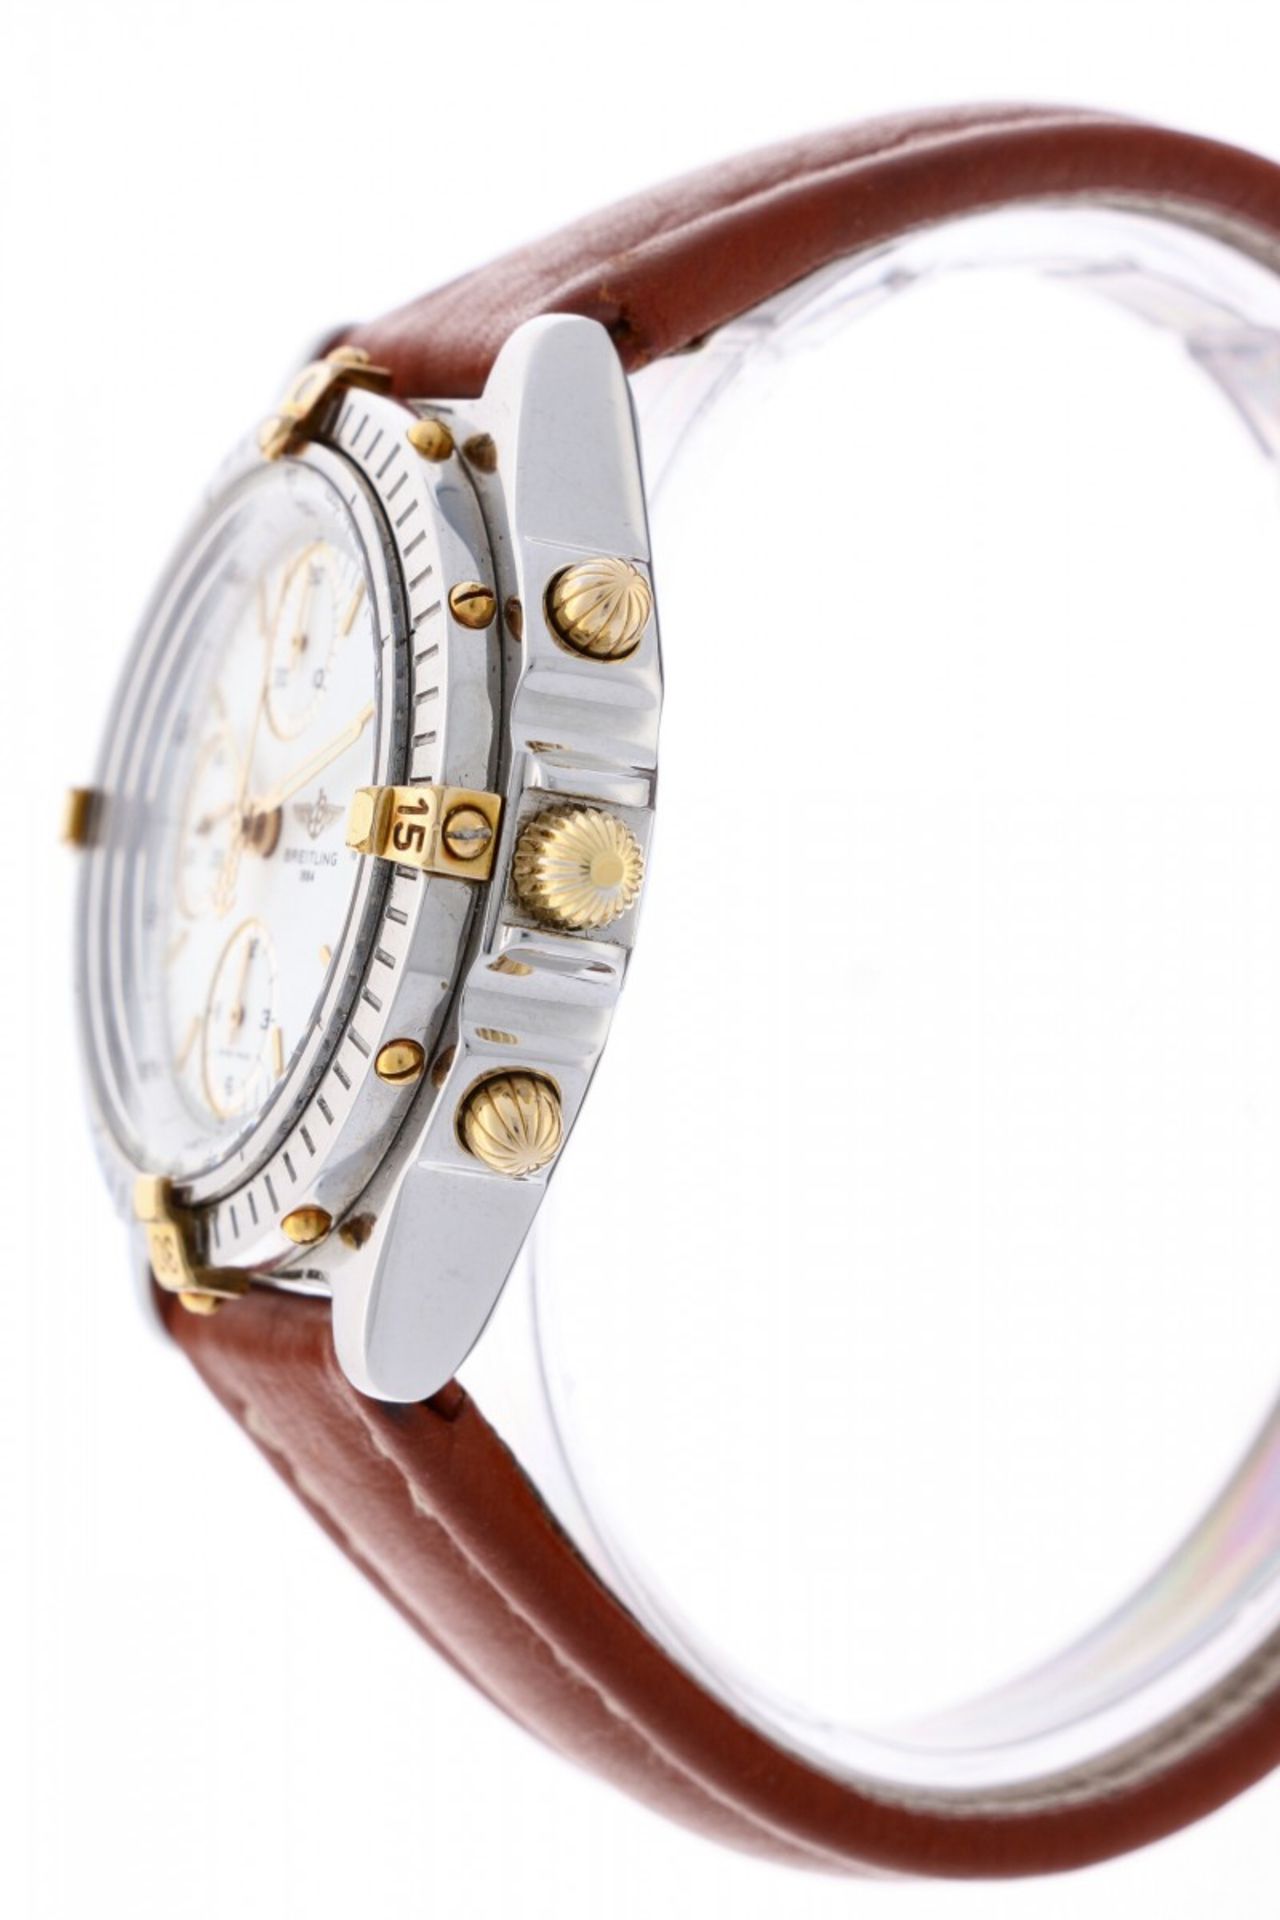 Breitling Chronomat B13050 - Men's watch - ca. 2000 - Image 5 of 5